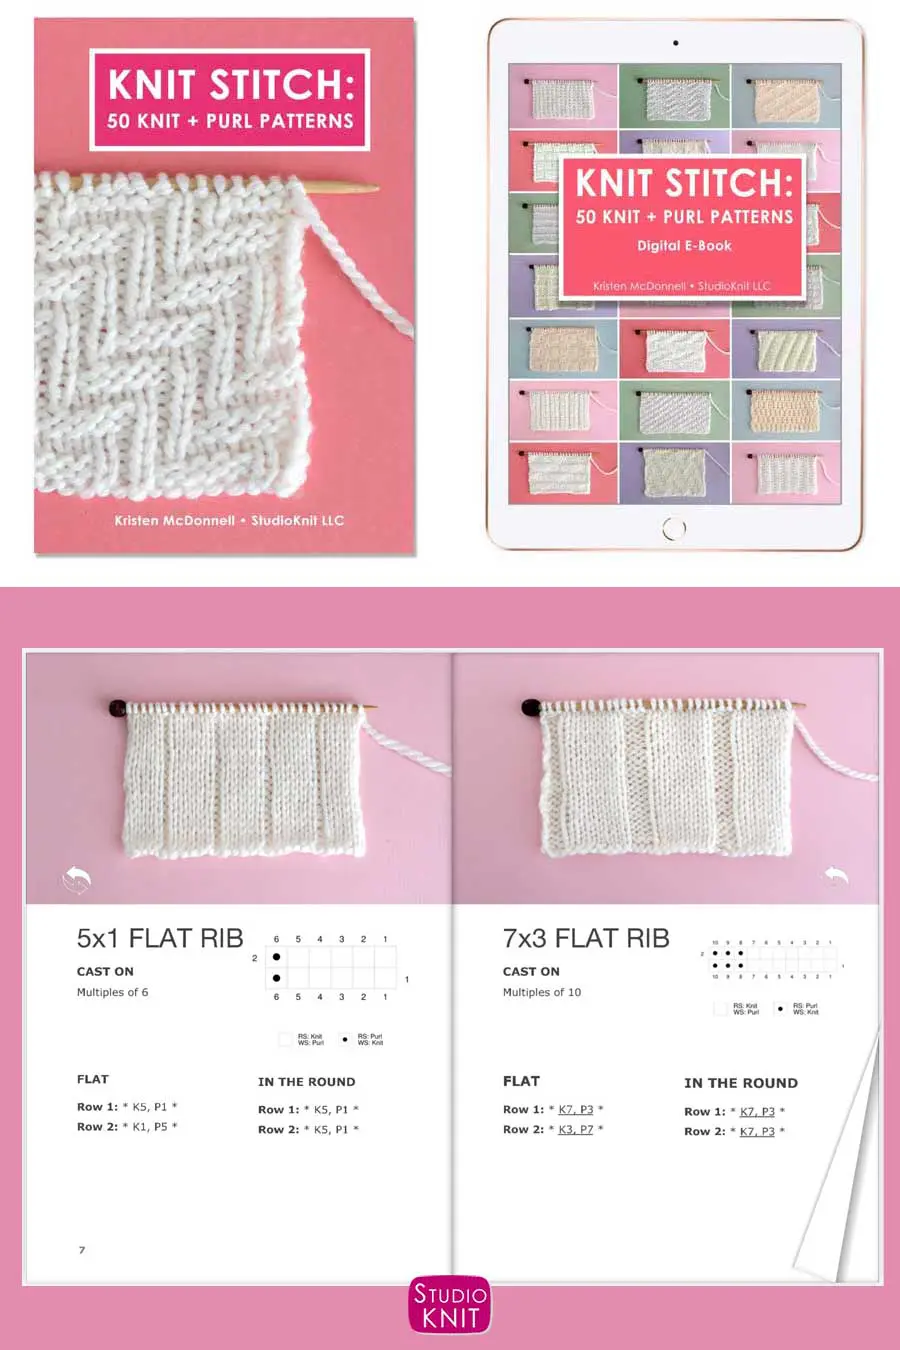 Knit Stitch Pattern Book with 5x1 Flat Rib and 7x3 Flat Rib Stitch Patterns